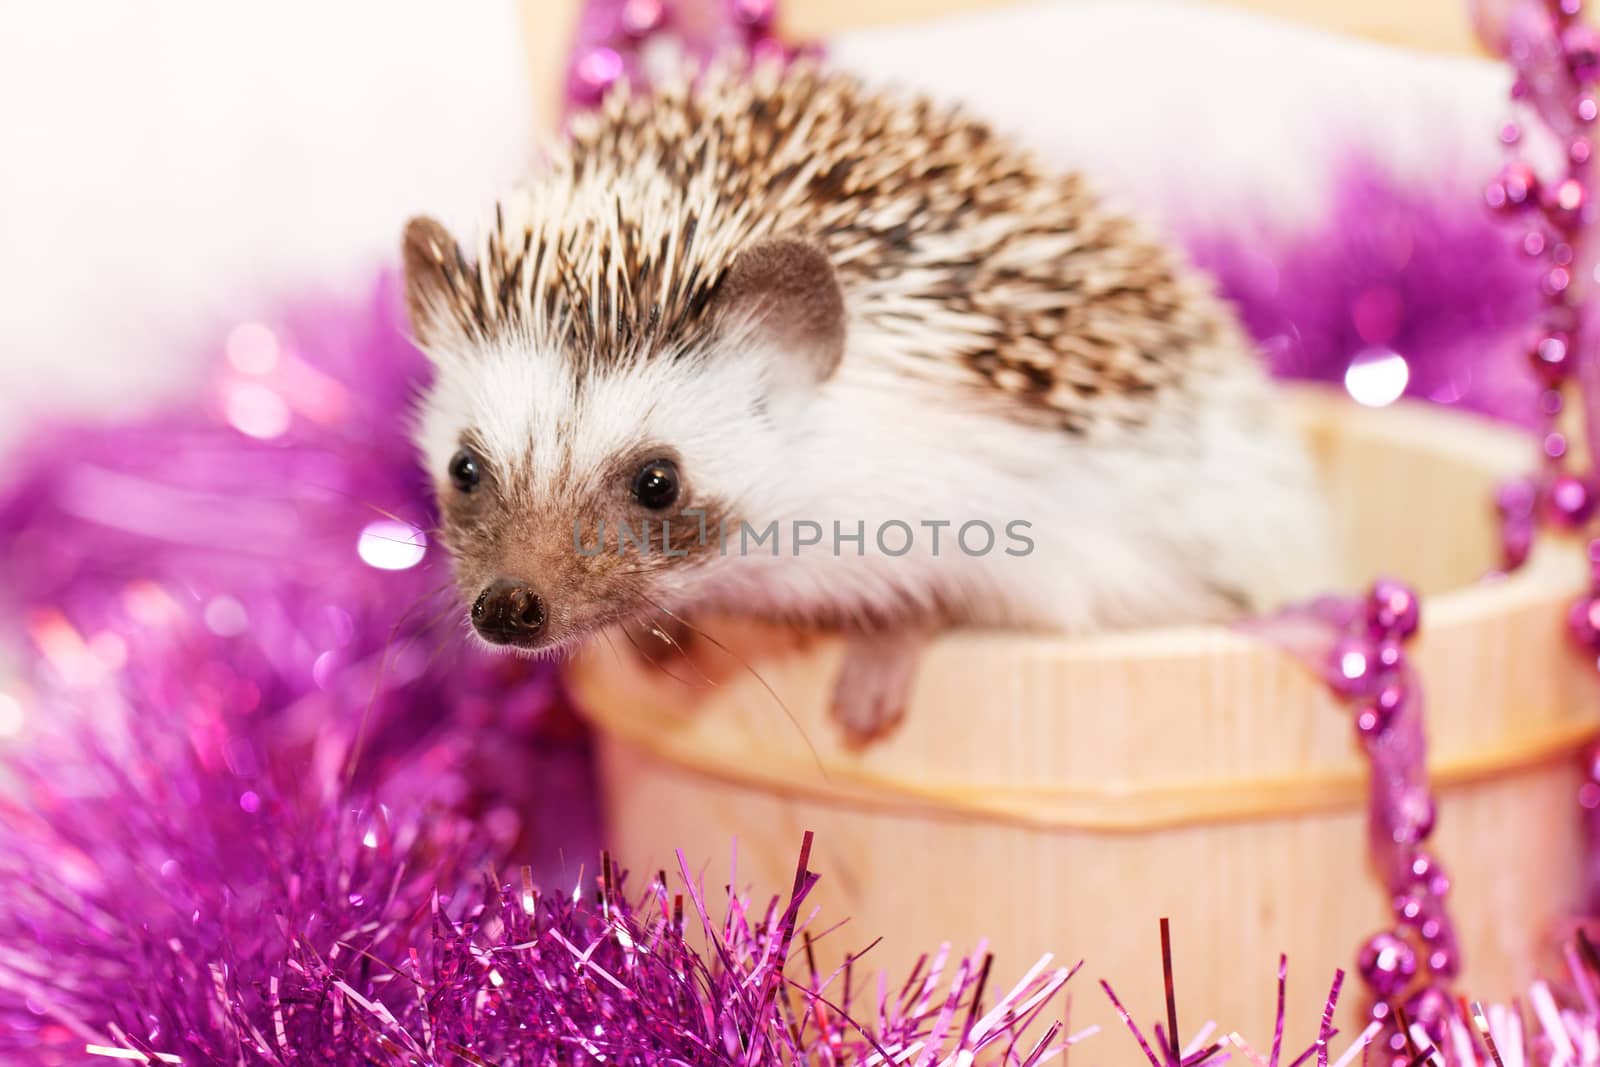 A cute little hedgehog - ( African white- bellied hedgehog ) by Nneirda